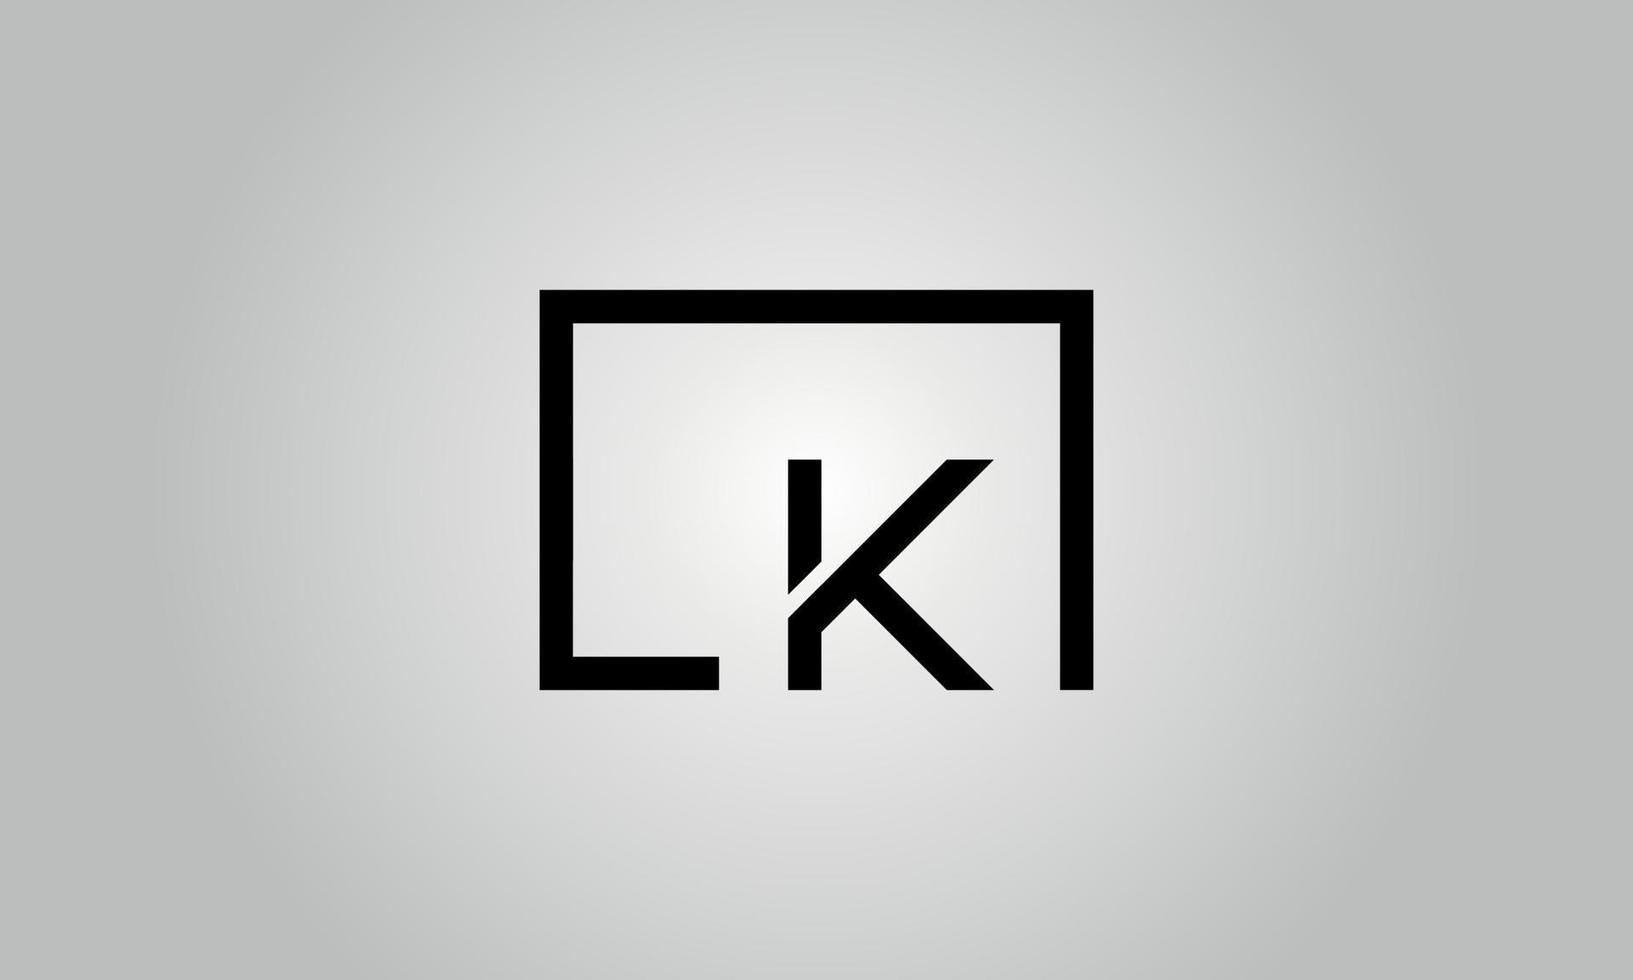 Letter LK logo design. LK logo with square shape in black colors vector free vector template.